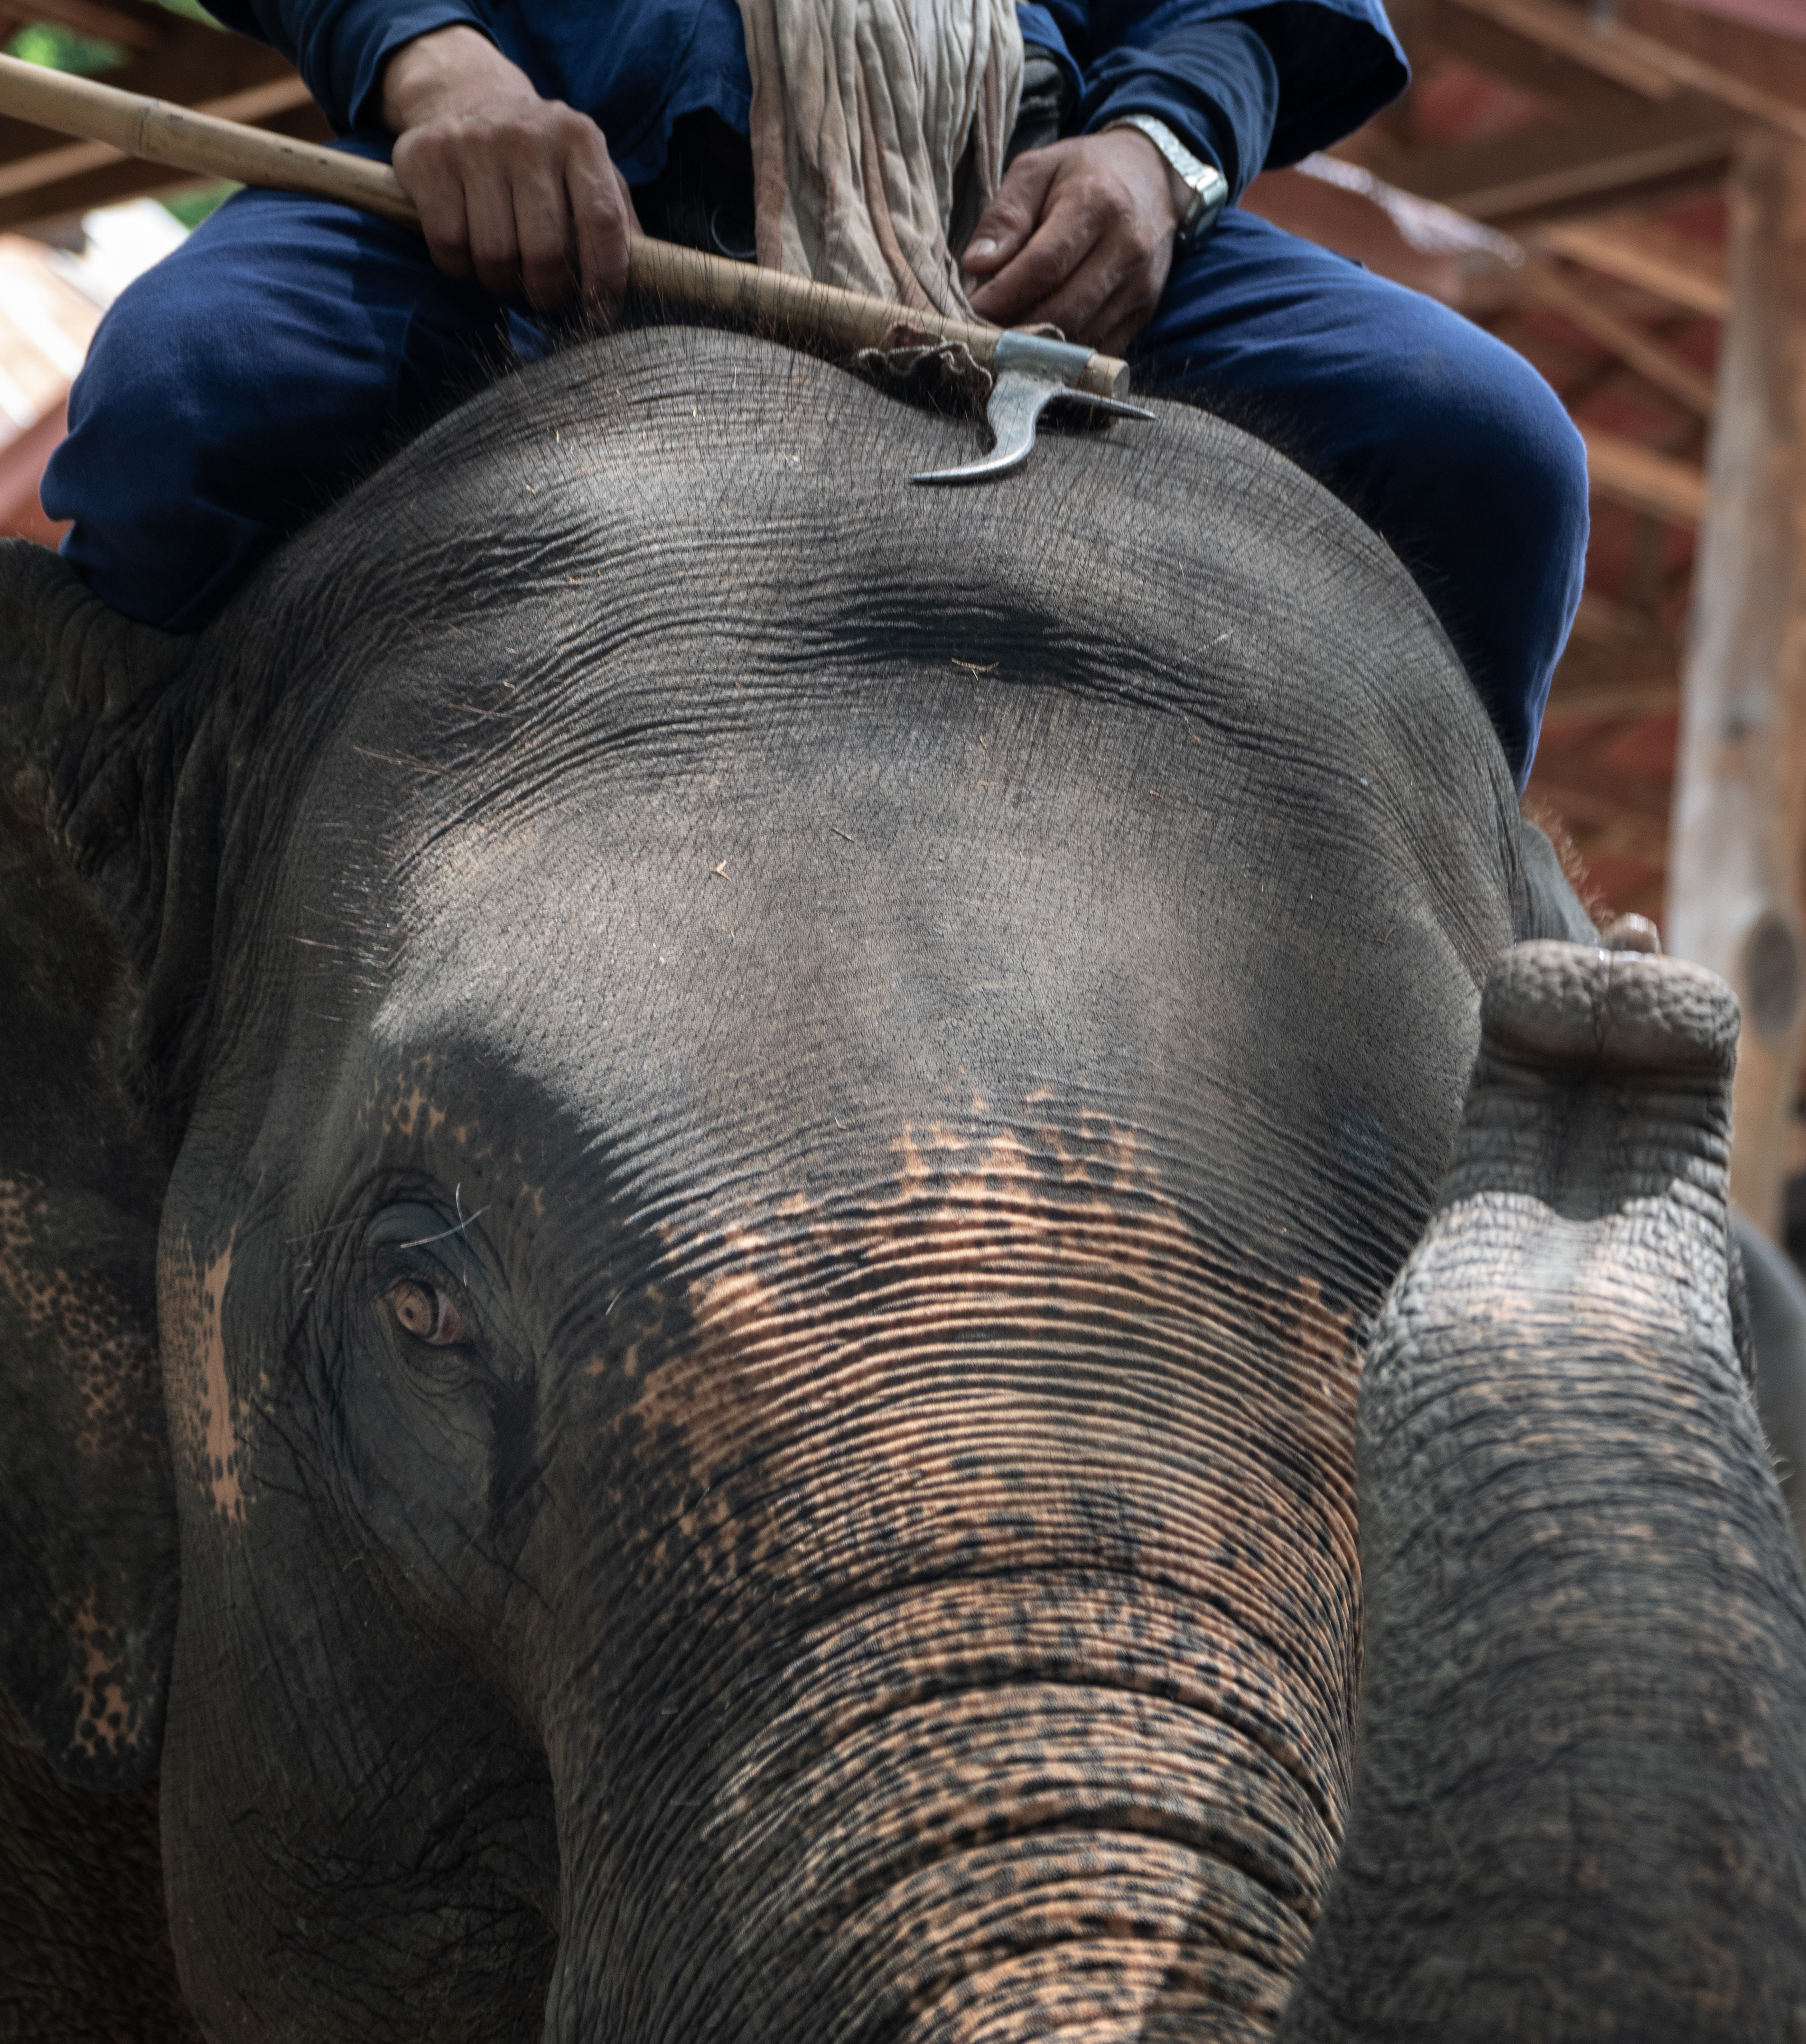 Bullhook on elephant's head in the Maesa elephant camp